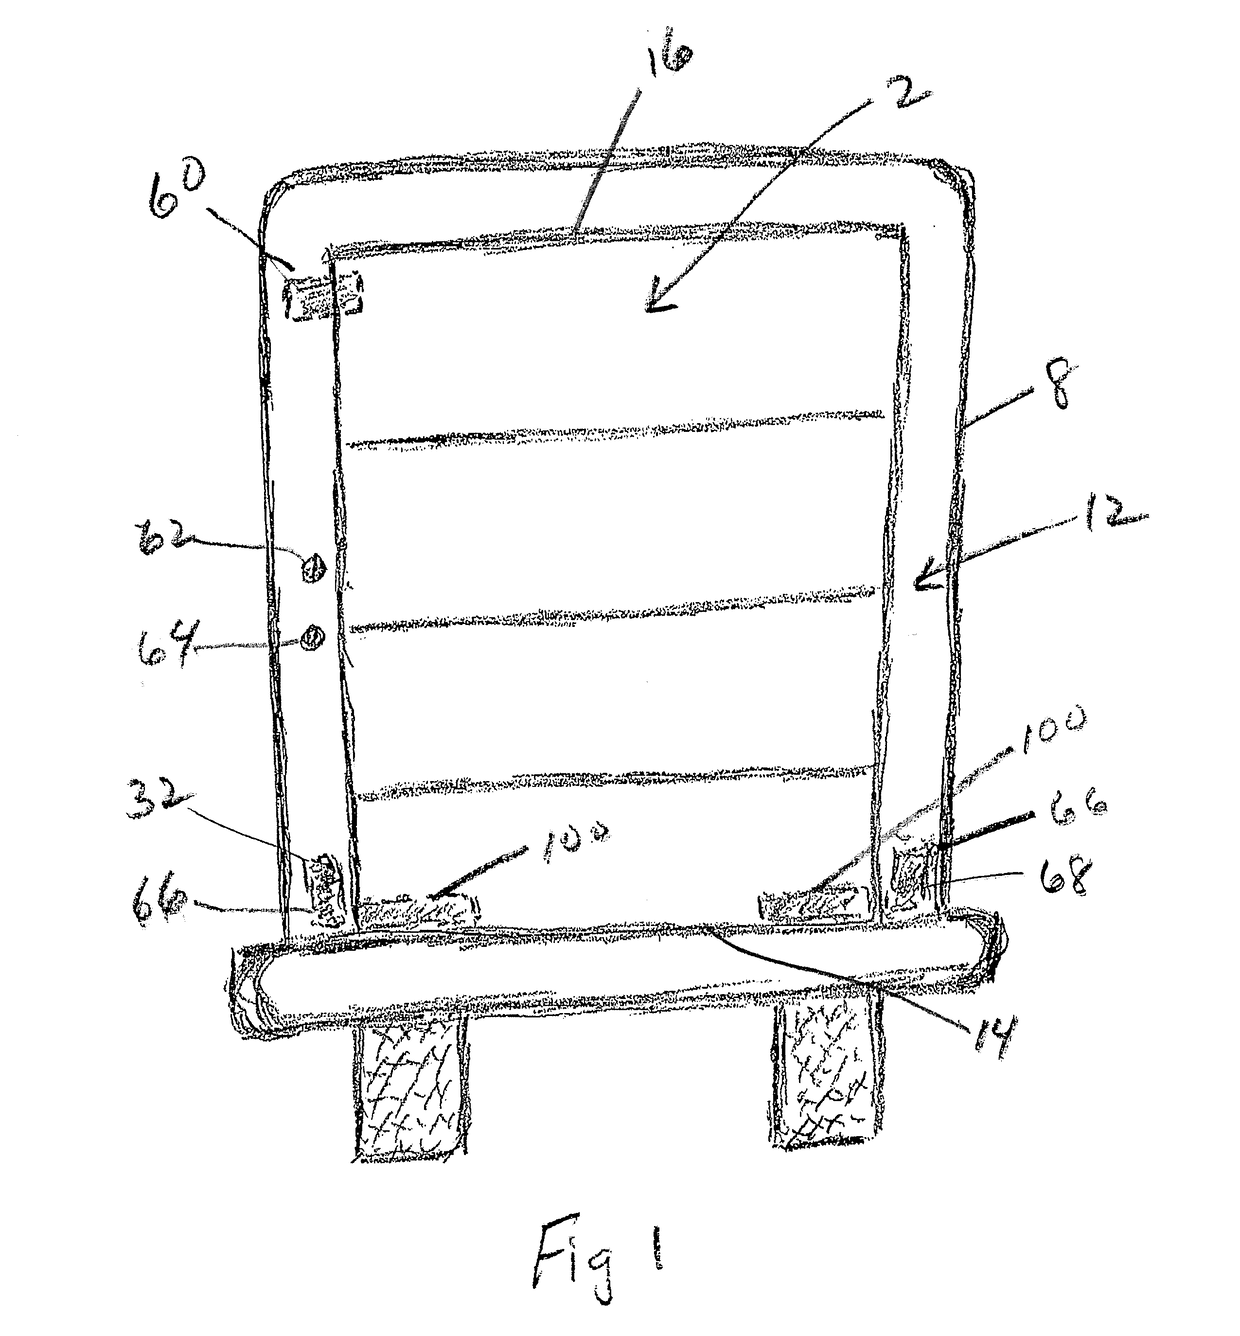 Apparatus for raising panel truck doors